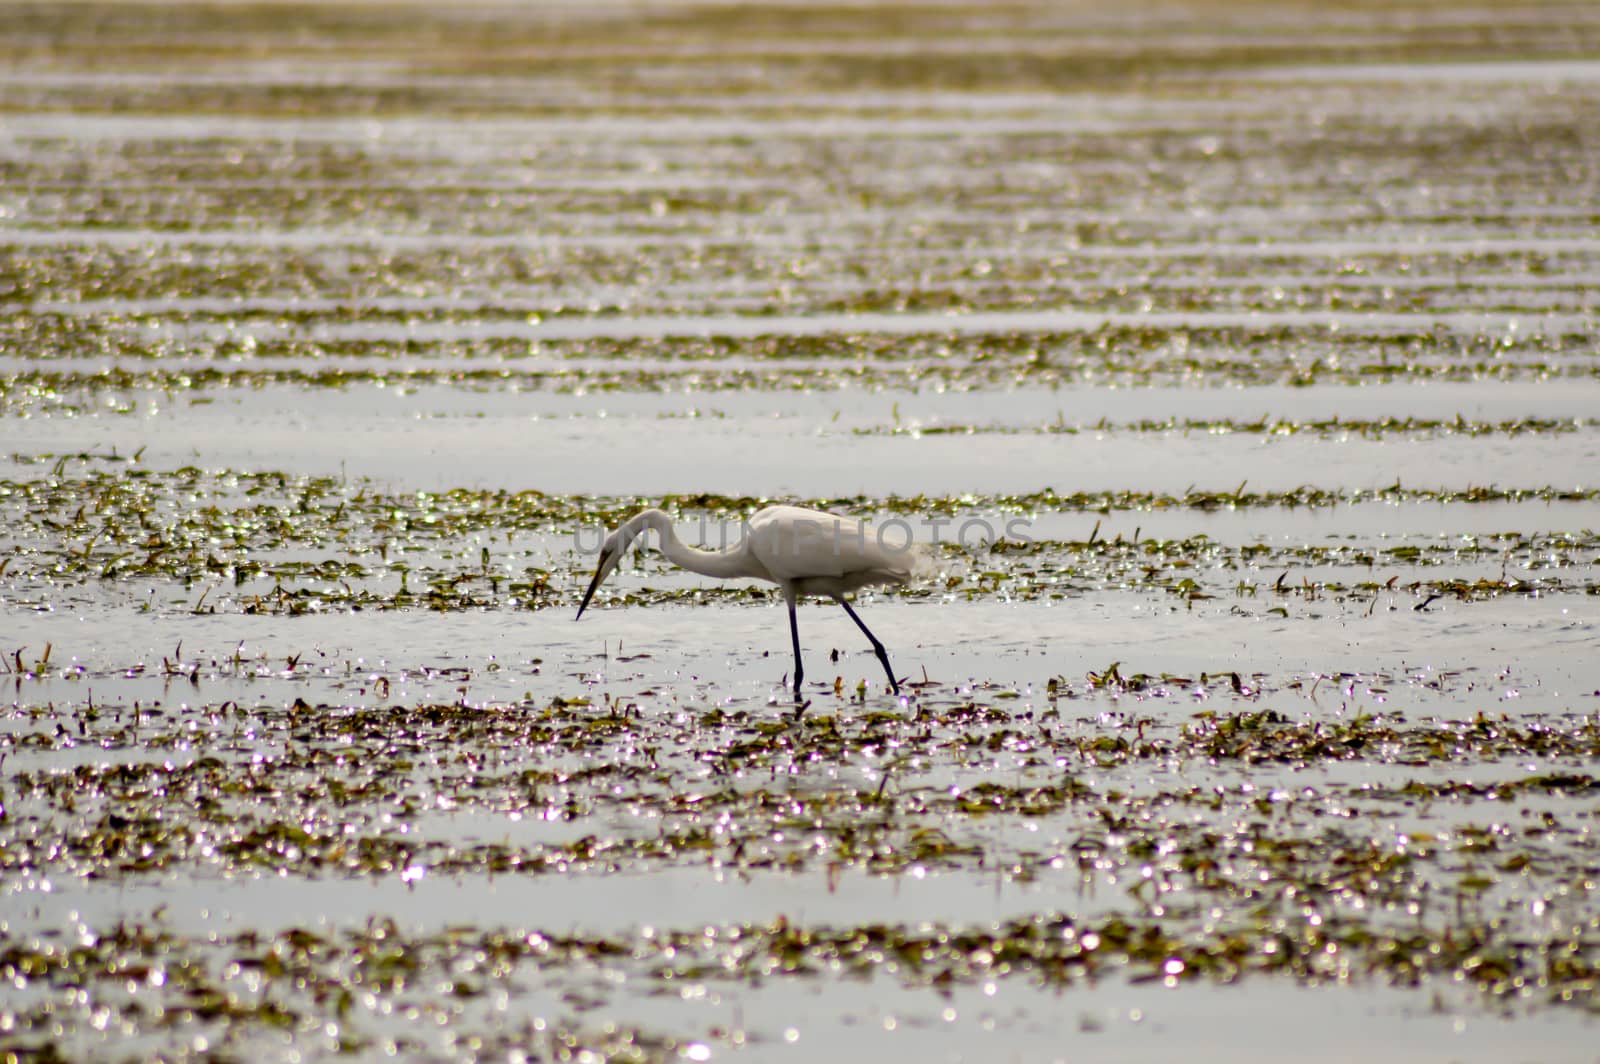 Great white egret with sand-worm fishing on the sandy beach of Bamburi near Mombasa in Kenya